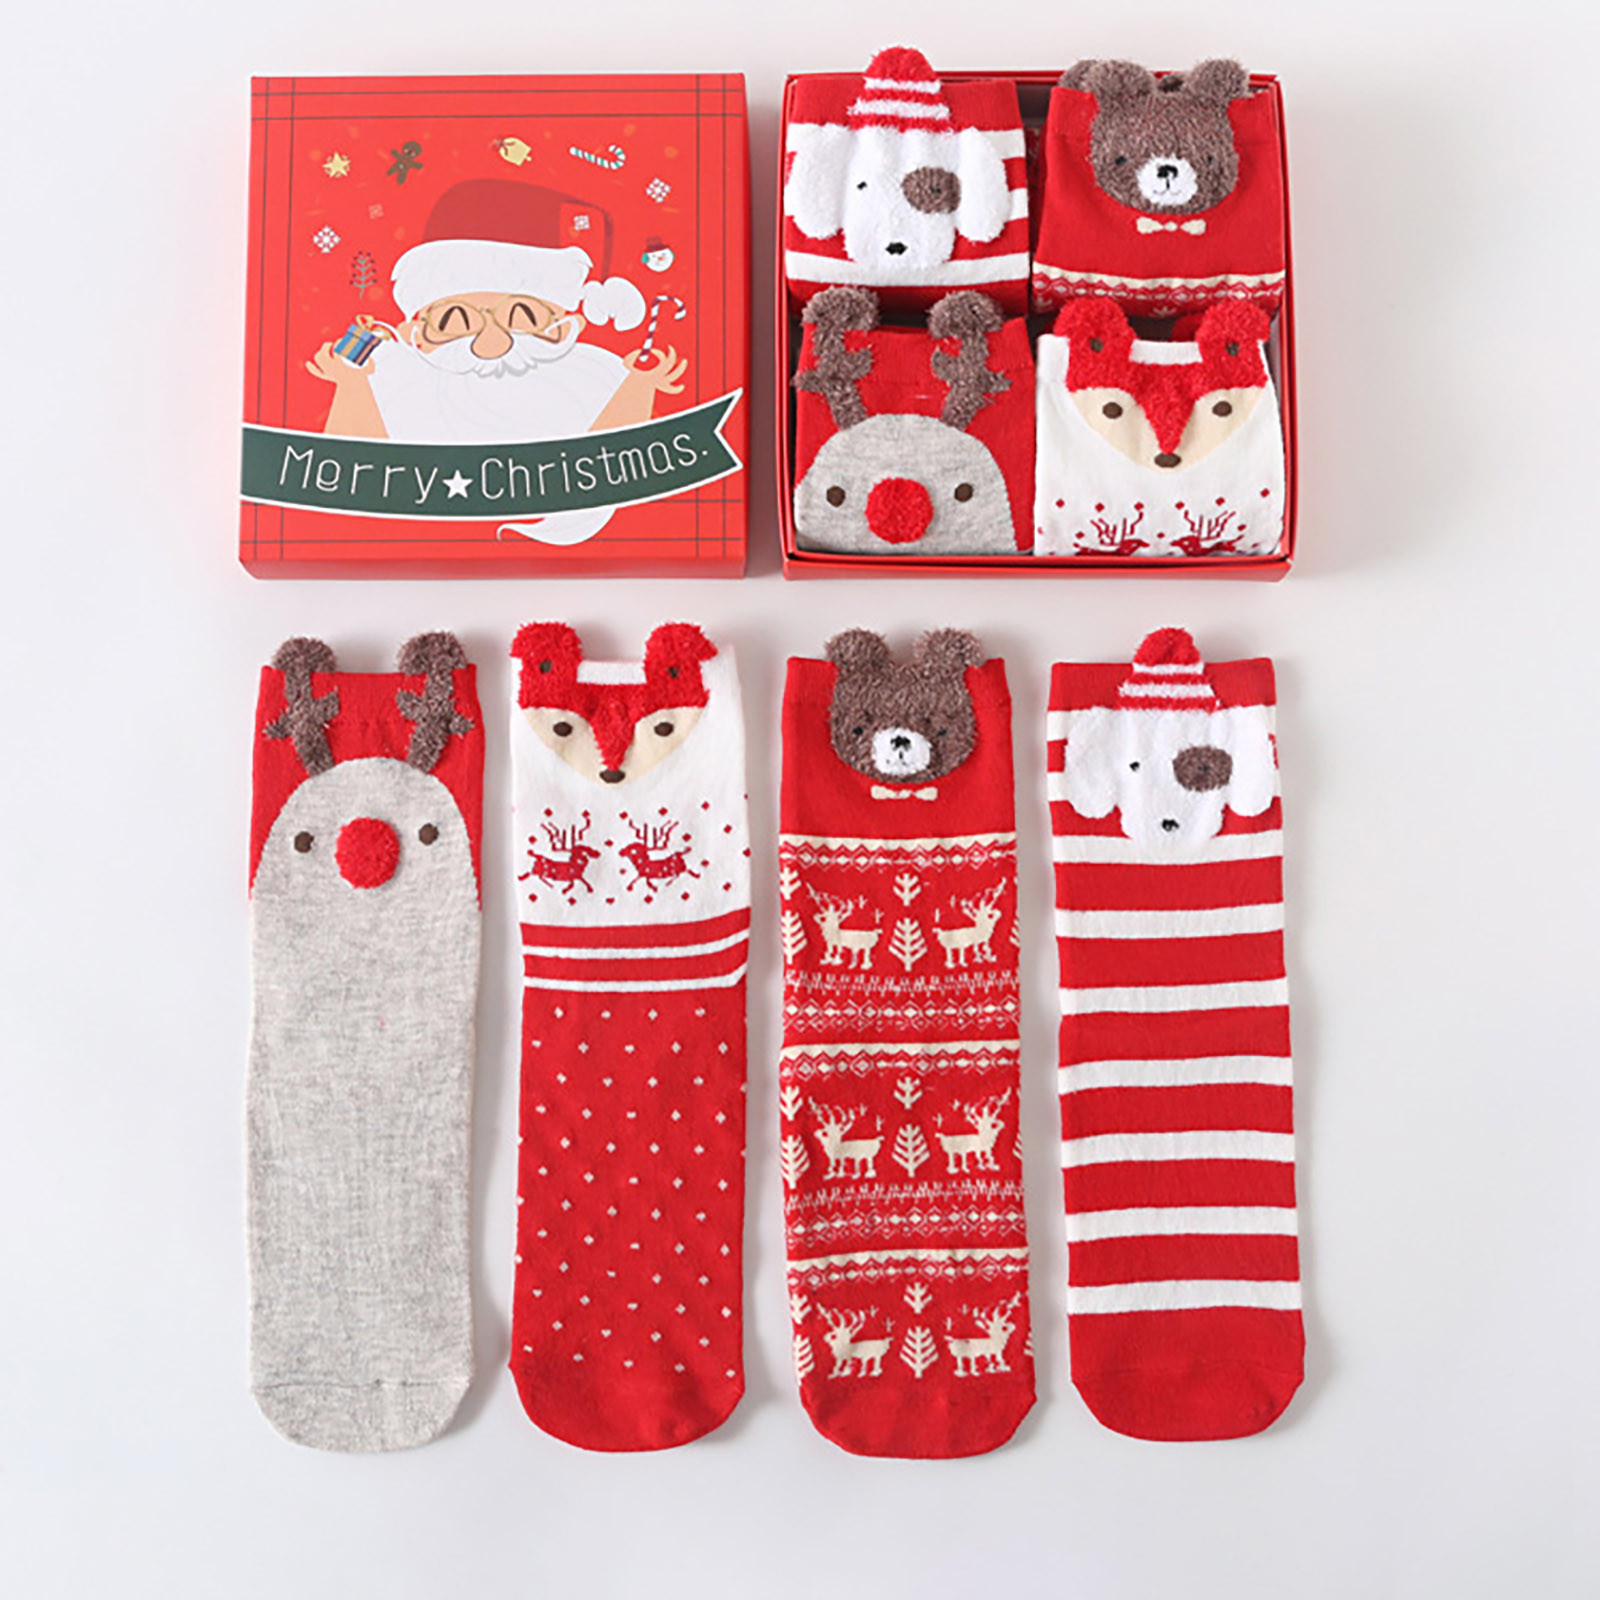 DENGDENG Women's Fluffy Fuzzy Winter Warm Sleeping Christmas Slipper Socks 4 Pairs Walmart.com